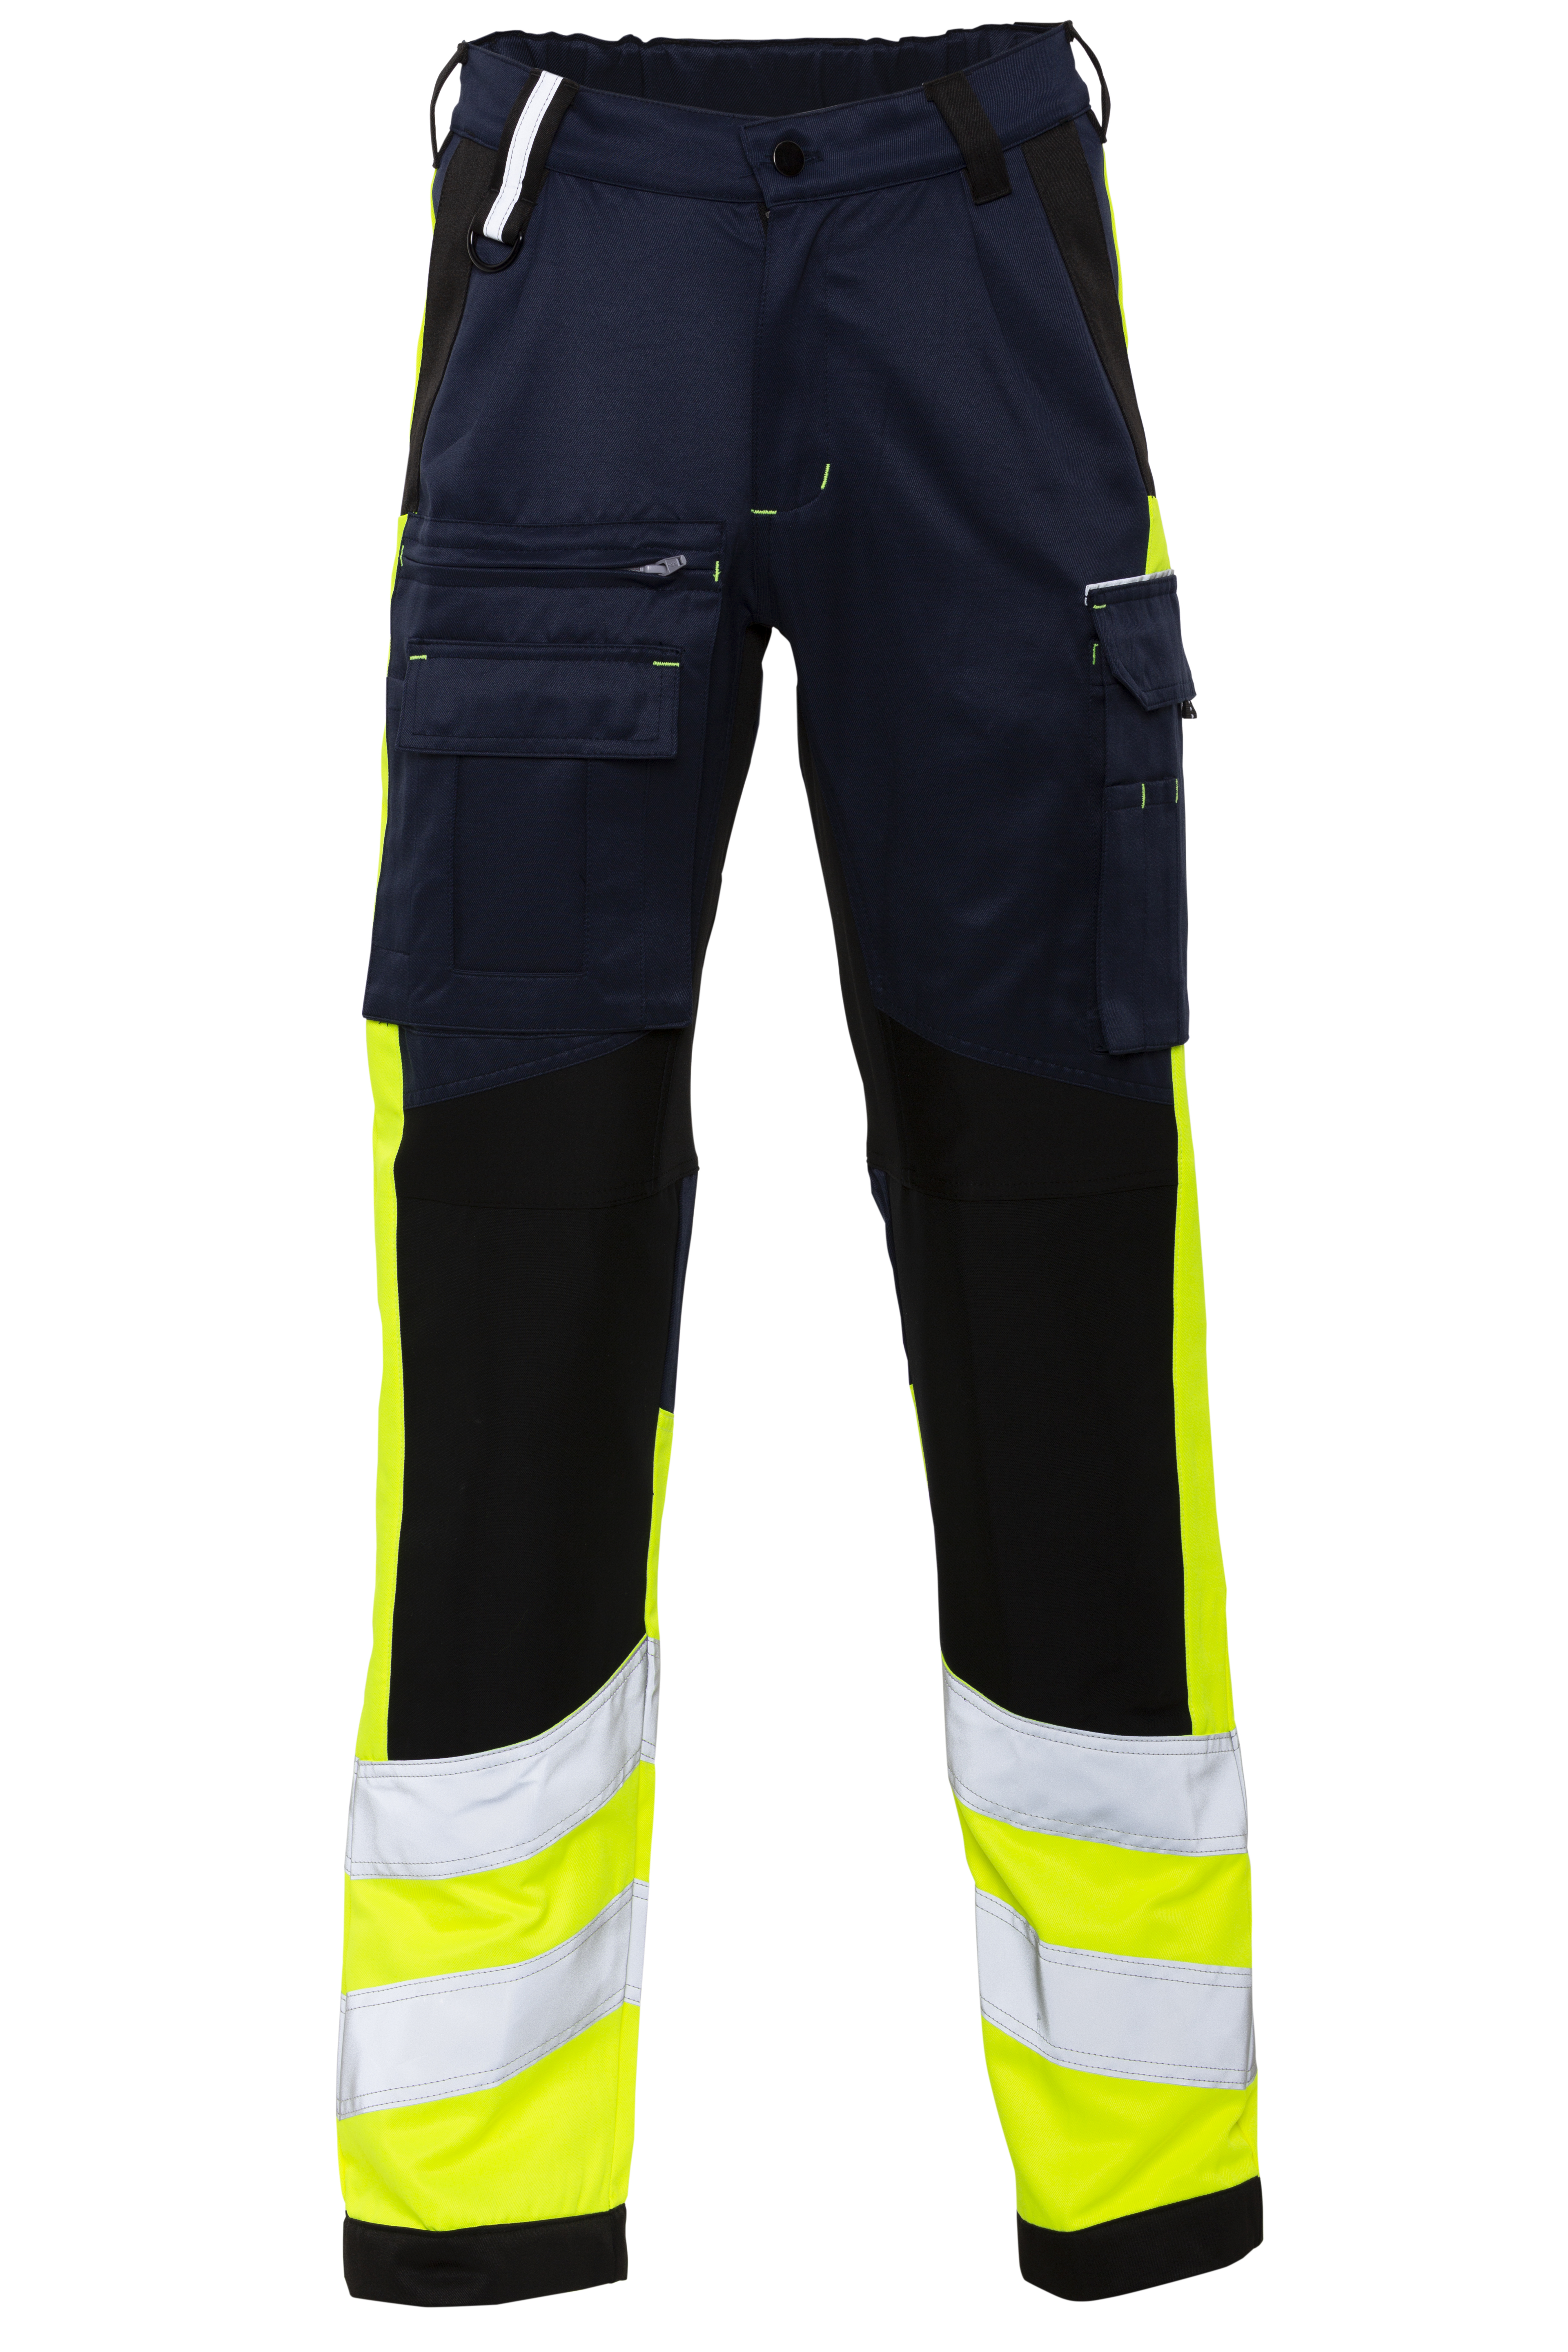 Rescuewear Unisex Hose Stretch HiVis Klasse 1 Marieneblau / Schwarz / Neon Gelb